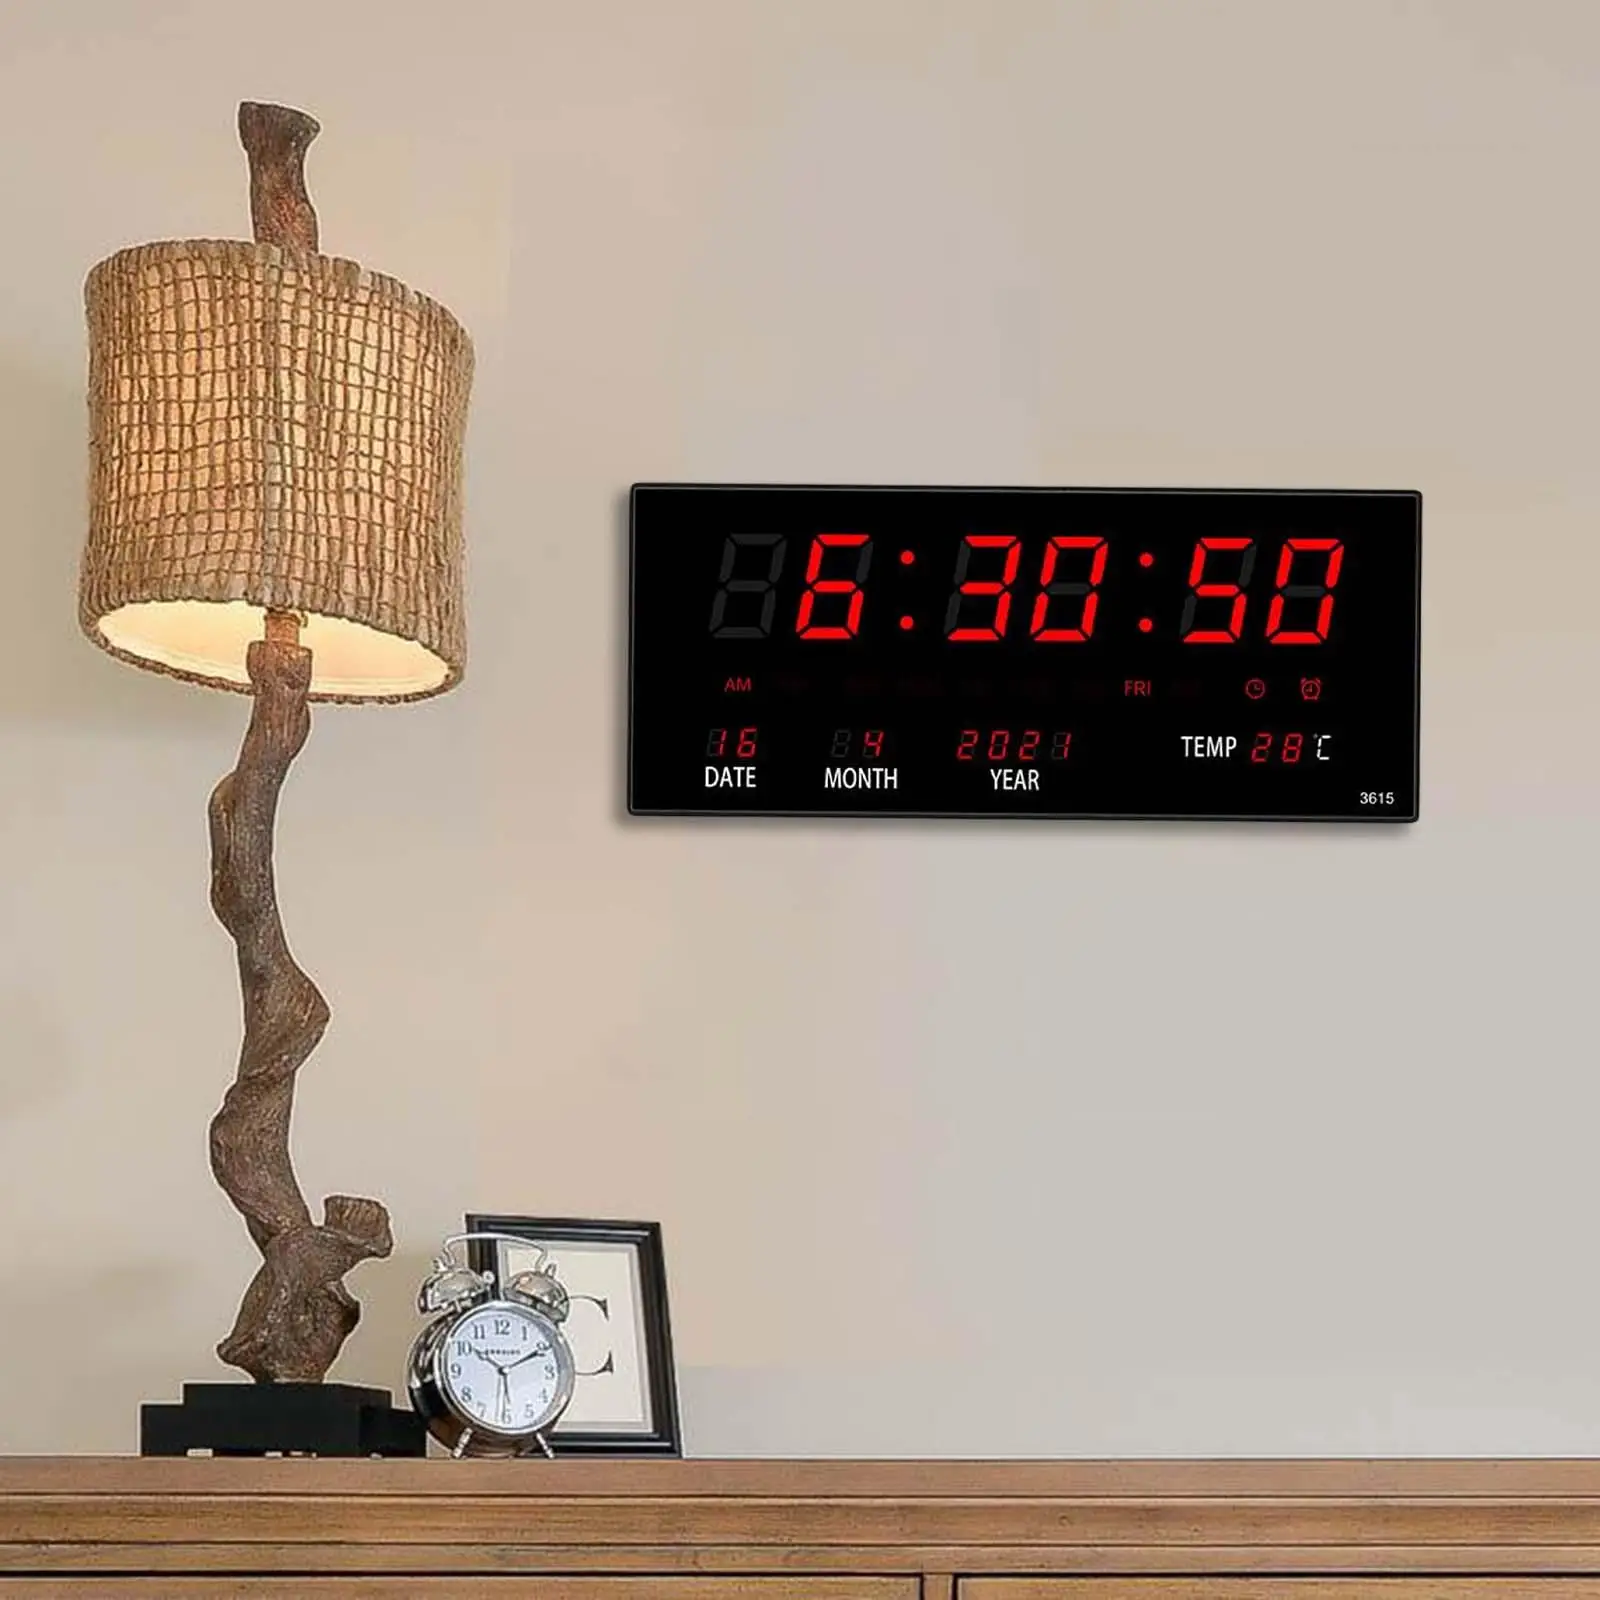 Wall Digital Clock with Date Temperature Kitchen Garage Home Decoration